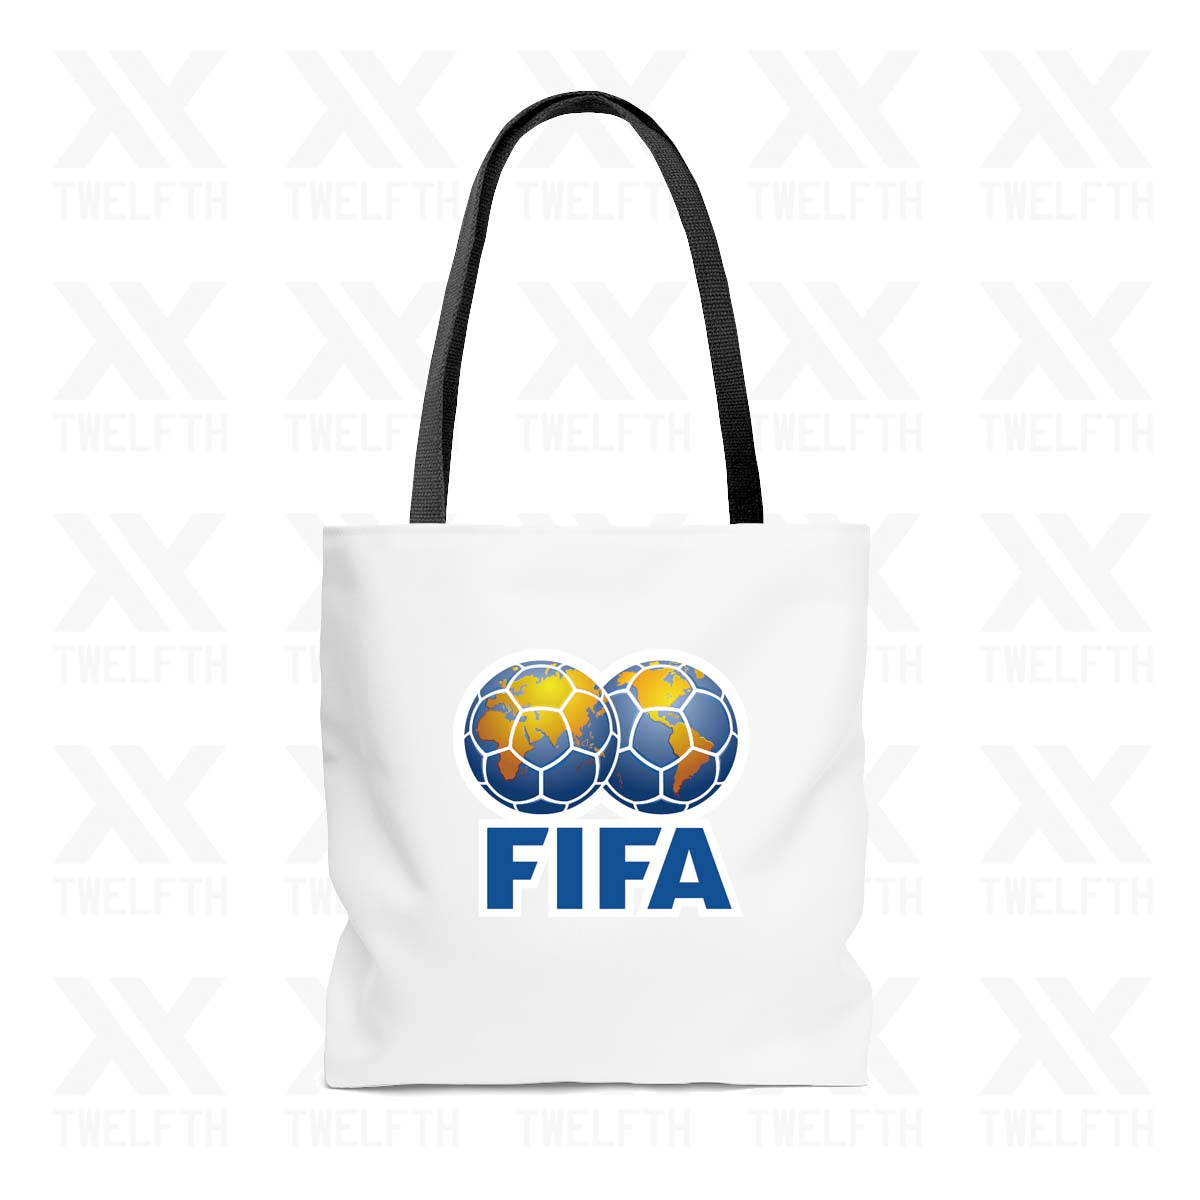 FIFA Crest Tote Bag